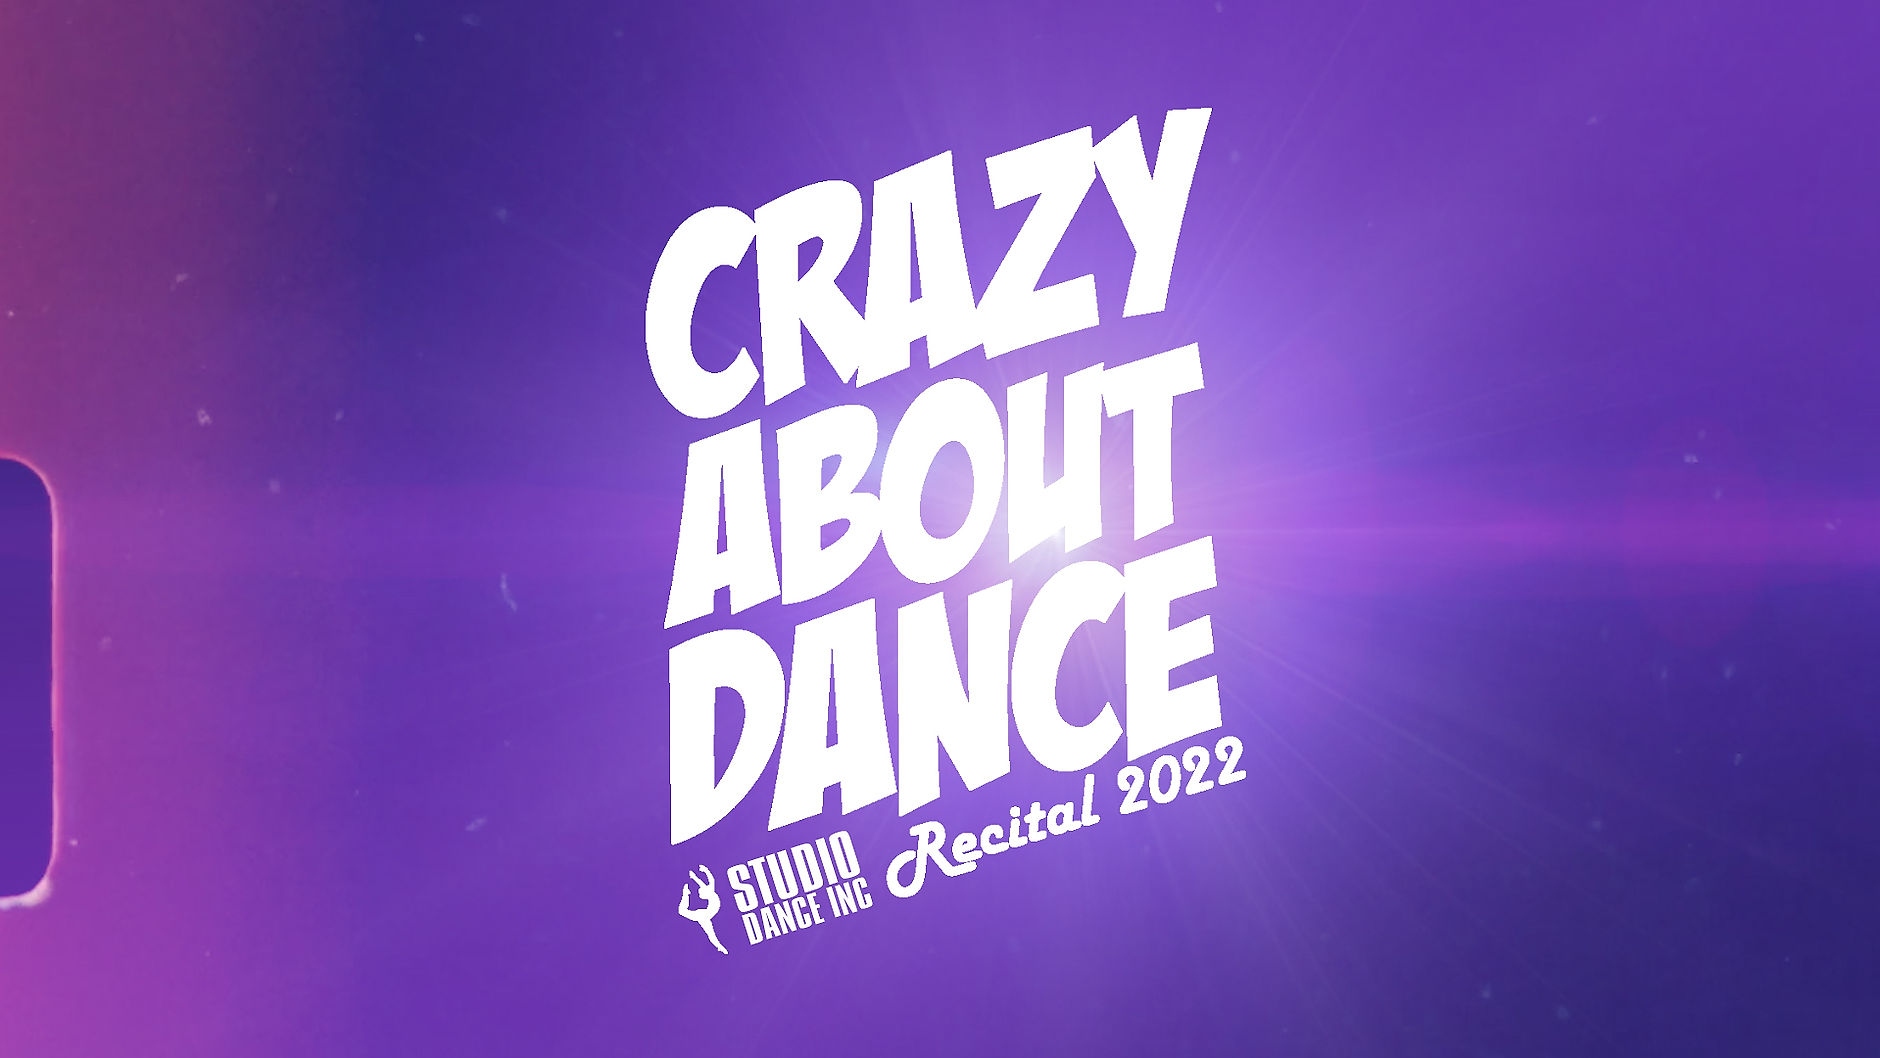 SDI - Crazy About Dance 2022